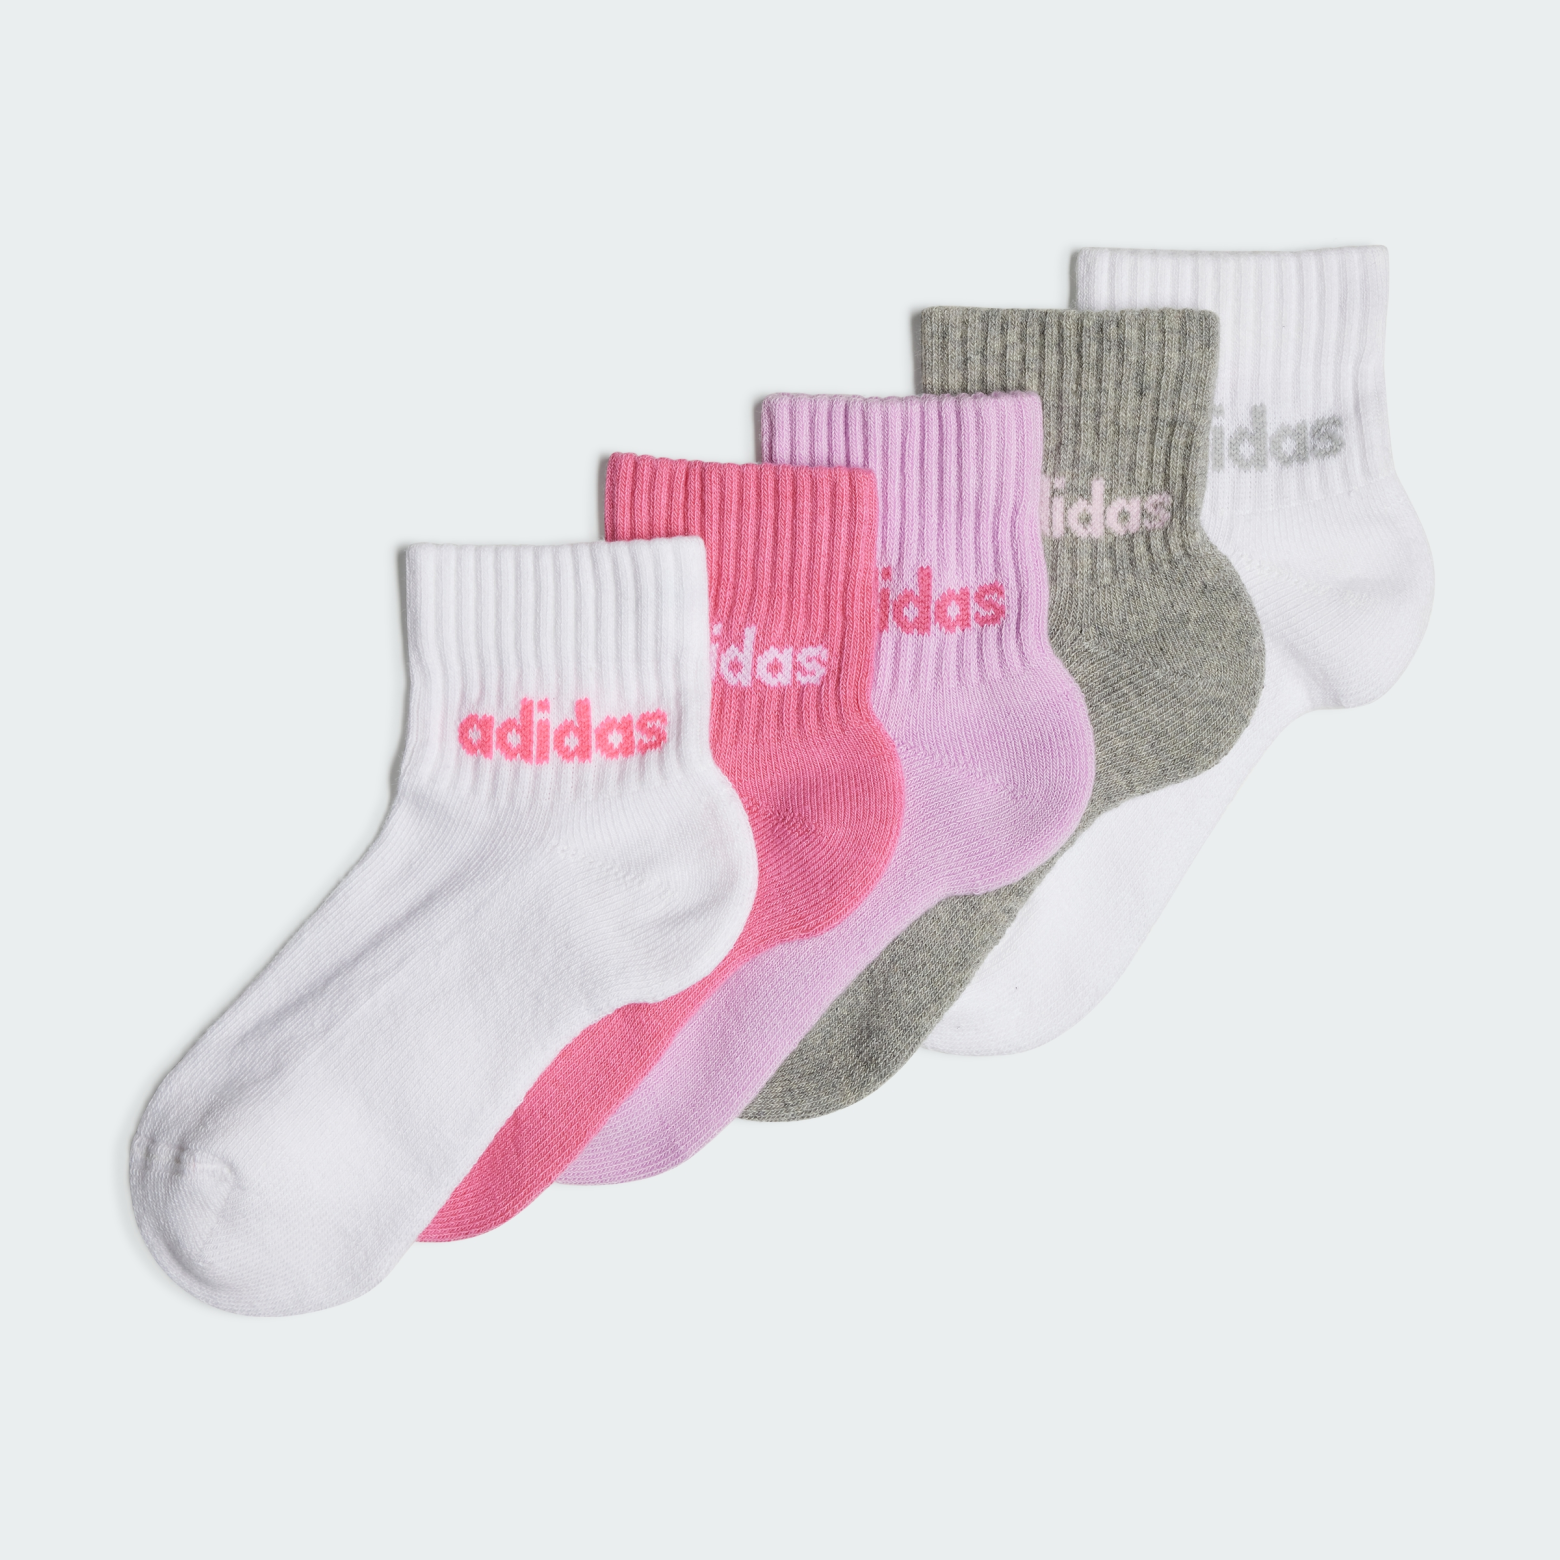 Linear Ankle Socks Kids бес жұп шұлығы Performance IR8229 1